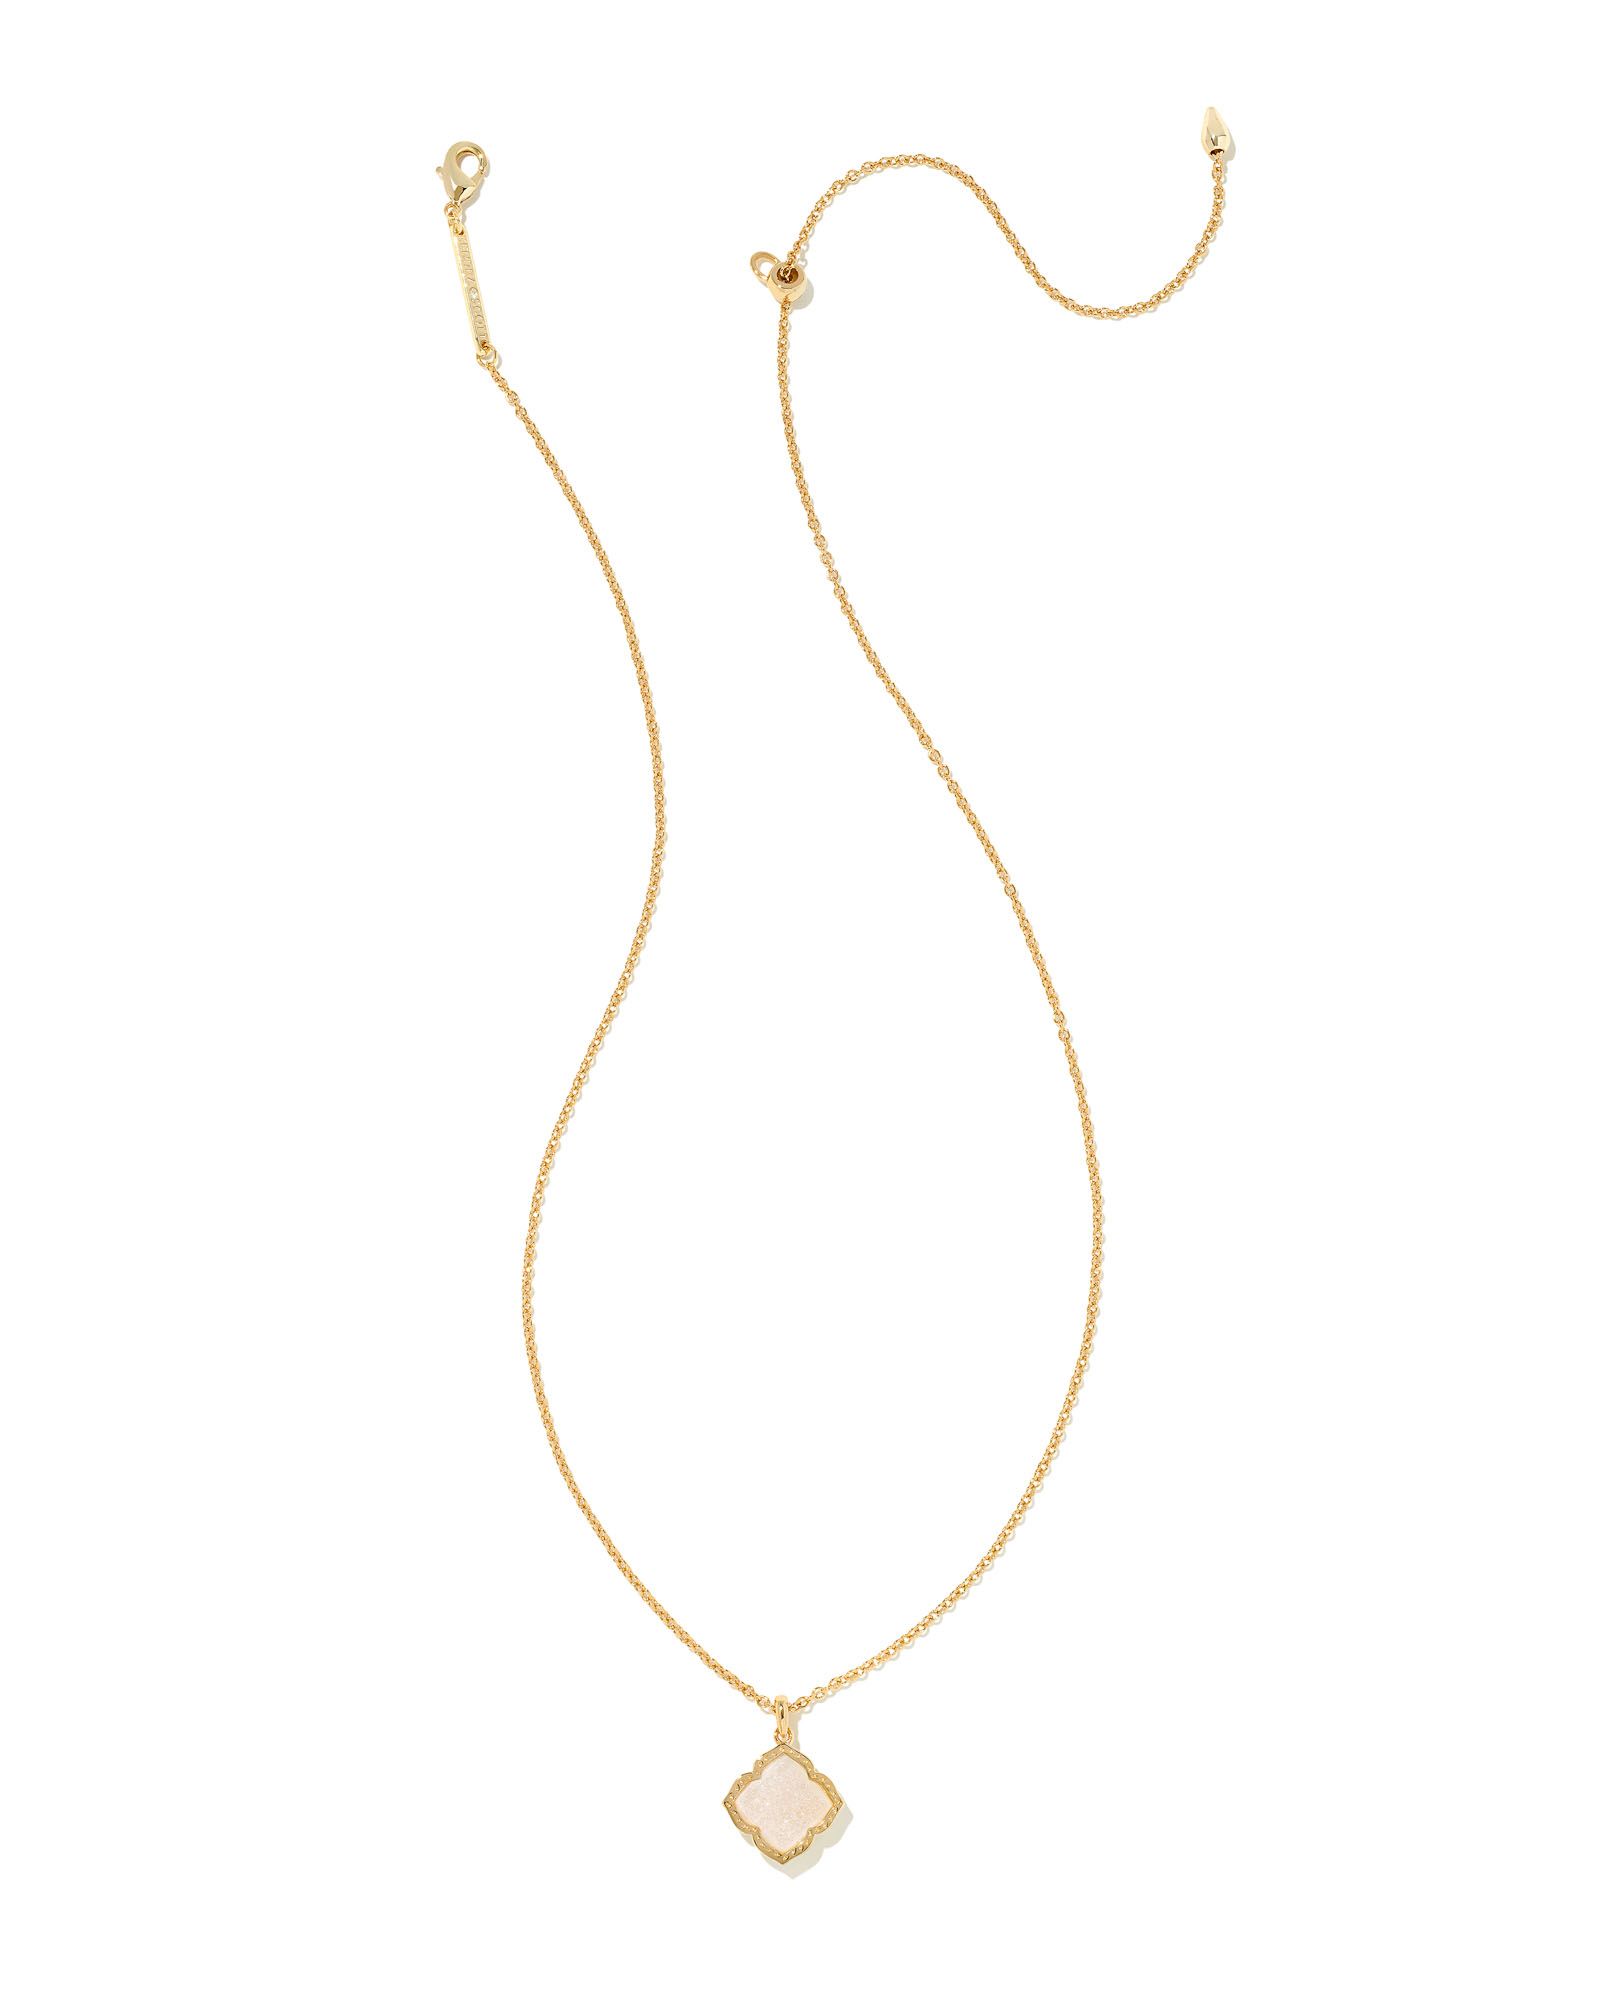 Mallory Gold Pendant Necklace in Iridescent Drusy | Kendra Scott | Kendra Scott